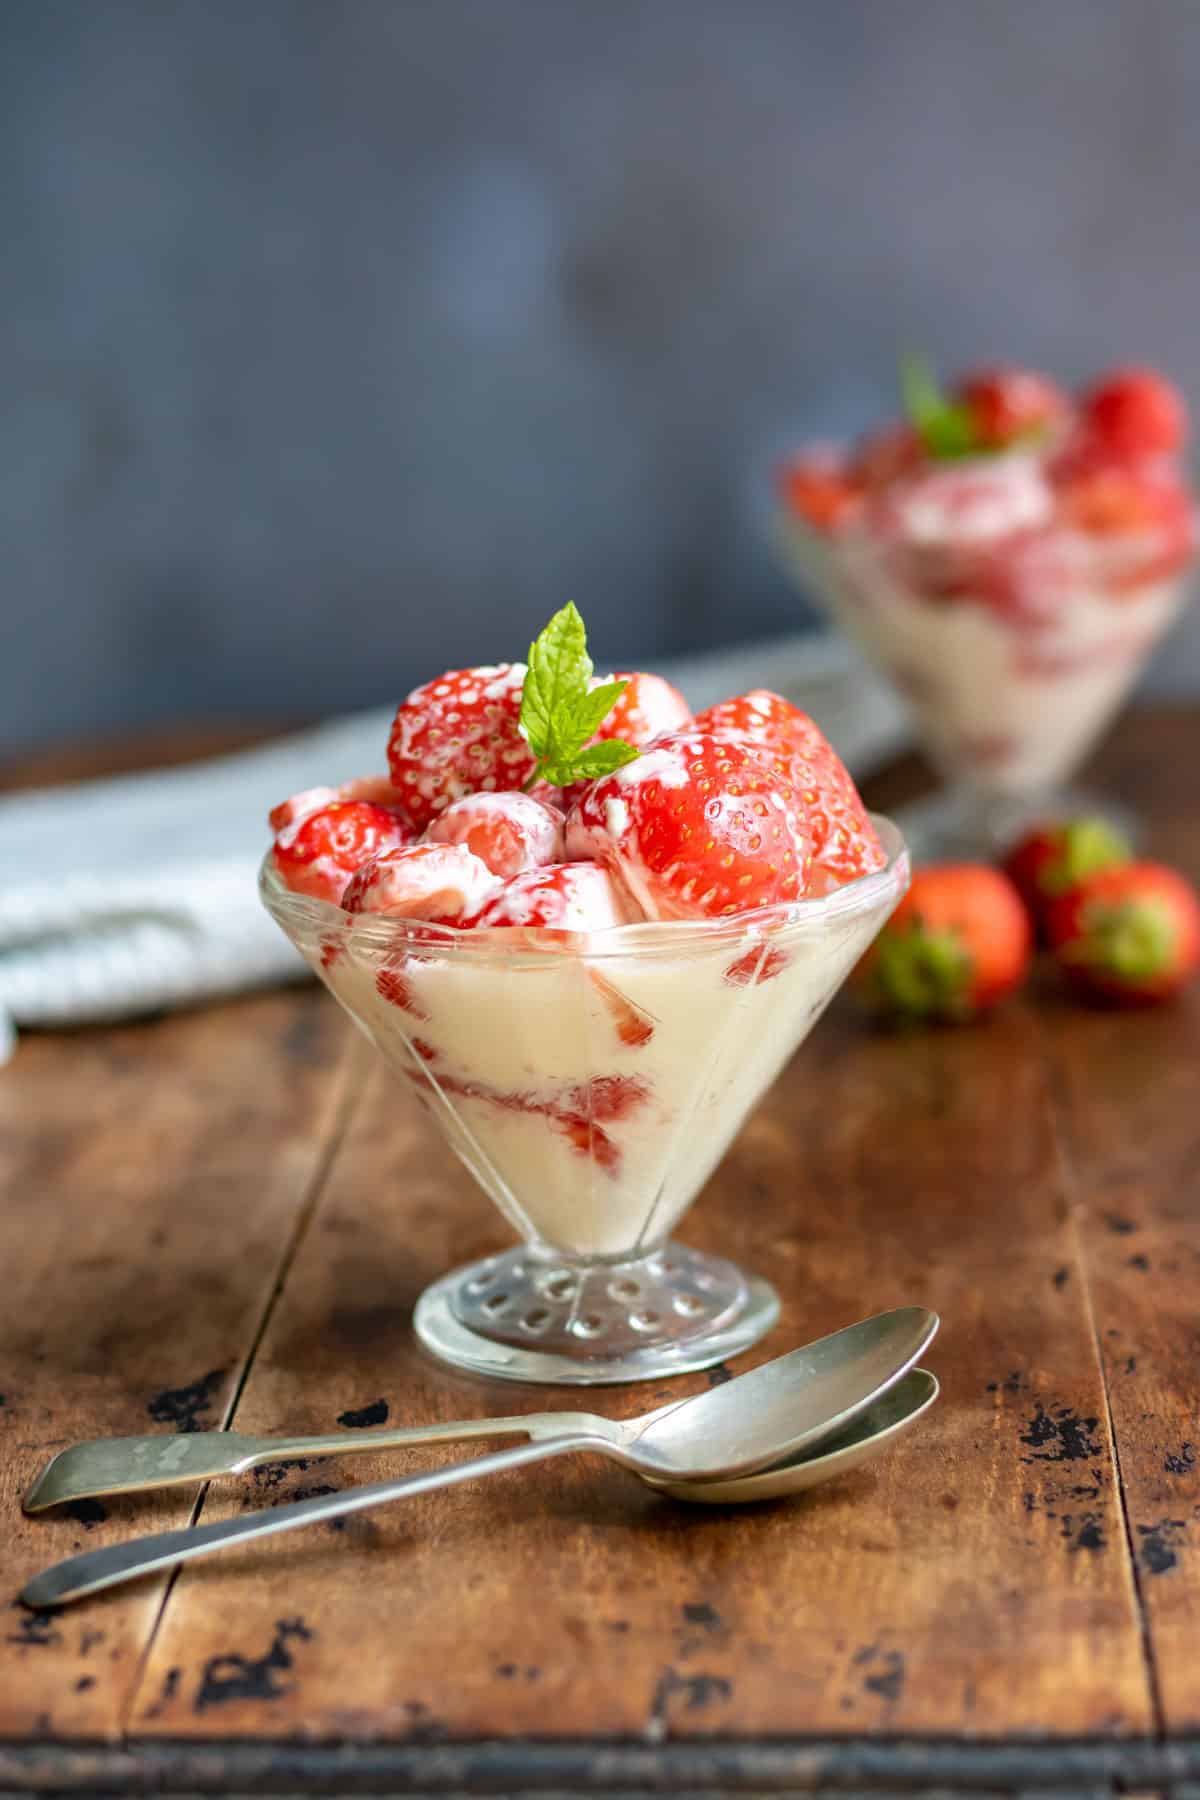 strawberries and cream dessert for Valentine's dinner